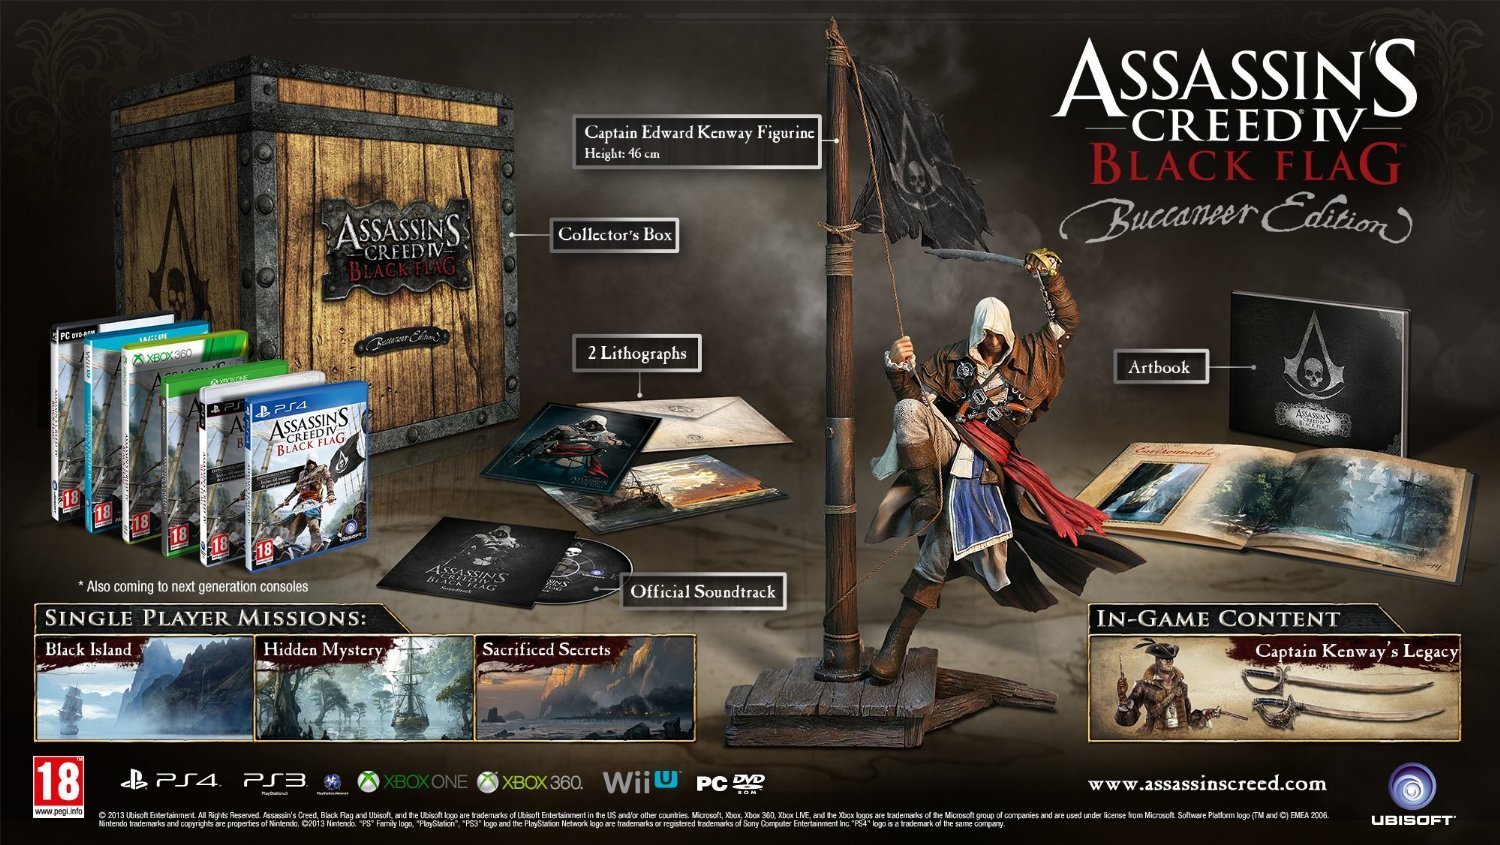 Assassins Creed IV: Black Flag Buccaneer Edition PS3